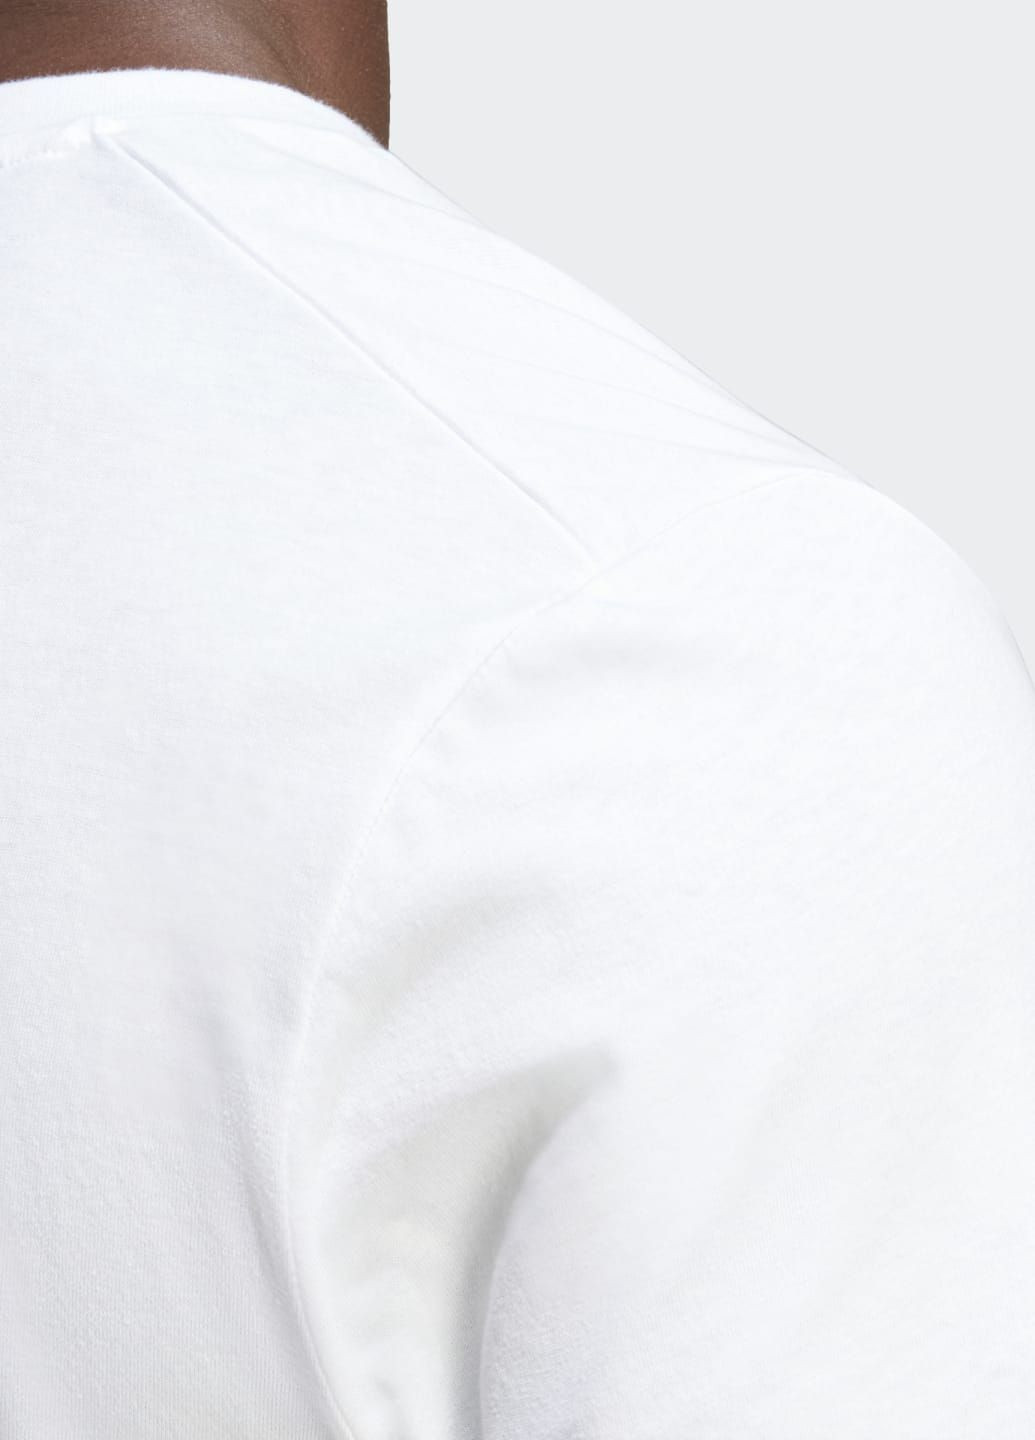 Белая футболка terrex classic logo adidas